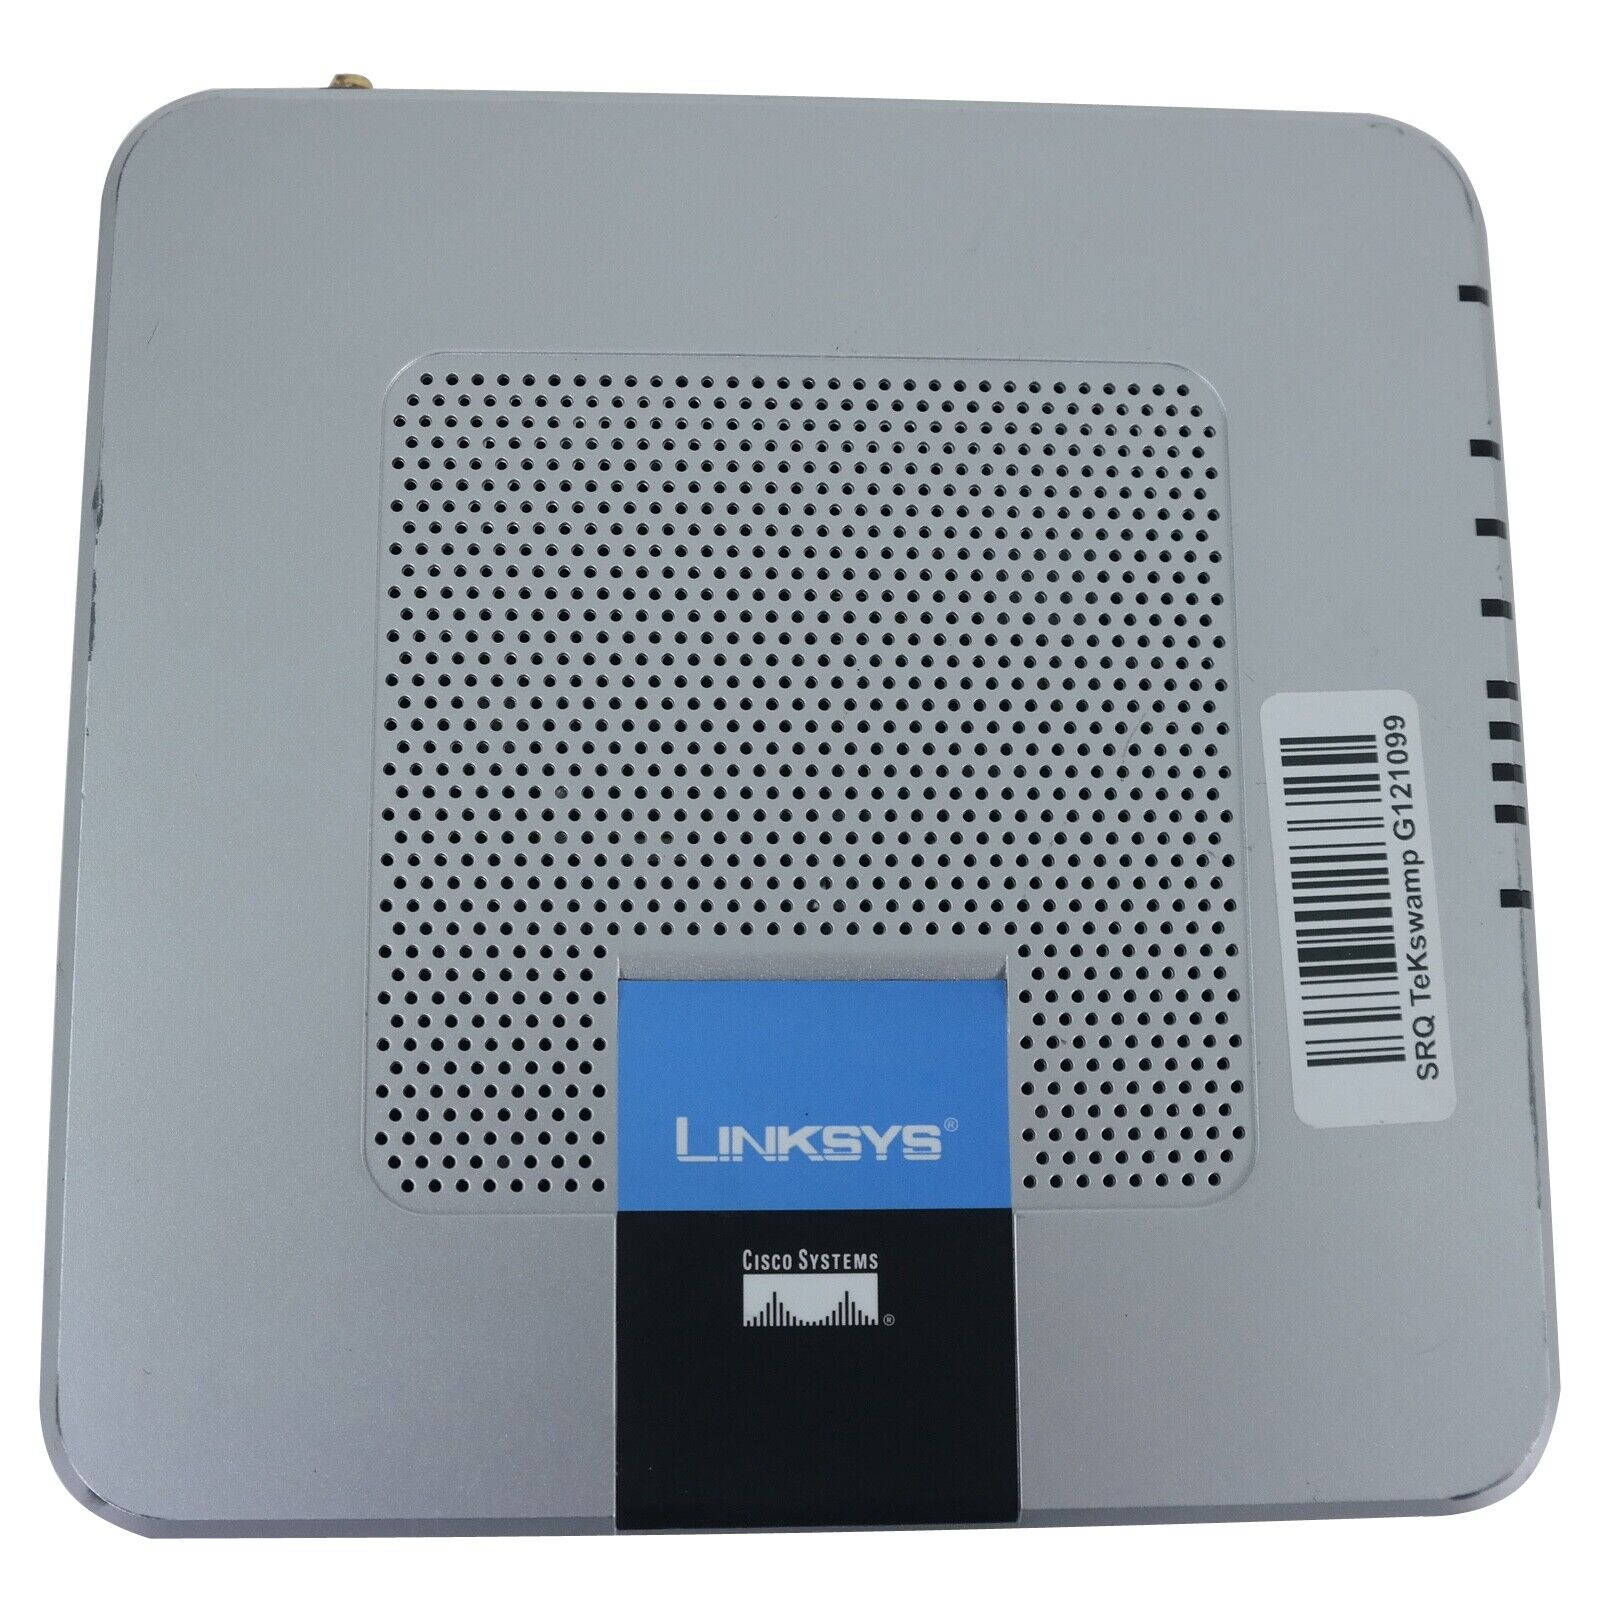 Vonage Linksys WRTP54G 3 Mbps 4-Port 10/100 Wireless G Router